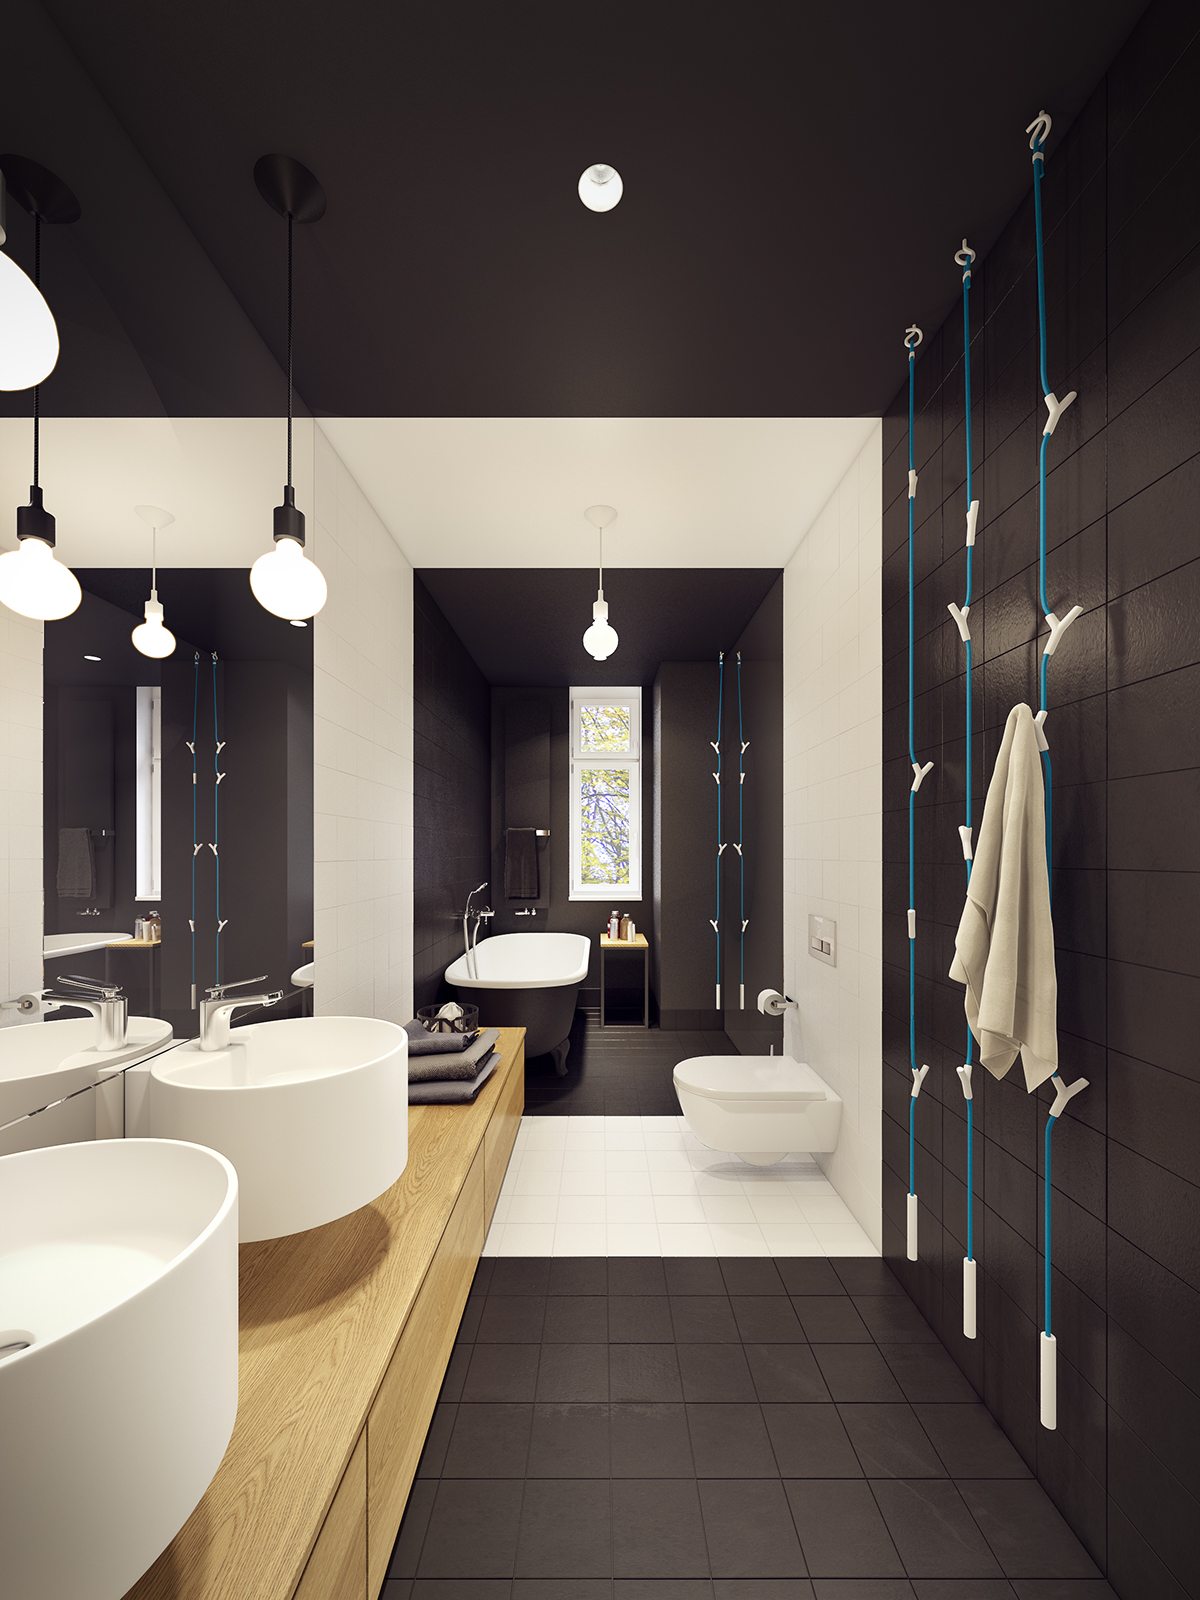 spacious gray bathroom design "width =" 1200 "height =" 1600 "srcset =" https://mileray.com/wp-content/uploads/2020/05/1588515746_361_Smart-Tips-Renovating-Spacious-Bathroom-Interior-Designs-With-Simple-and.jpg 1200w, https://mileray.com / wp-content / uploads / 2016/10 / PLASTERLINA-1-225x300.jpg 225w, https://mileray.com/wp-content/uploads/2016/10/PLASTERLINA-1-768x1024.jpg 768w, https: / / mileray.com/wp-content/uploads/2016/10/PLASTERLINA-1-696x928.jpg 696w, https://mileray.com/wp-content/uploads/2016/10/PLASTERLINA-1-1068x1424.jpg 1068w, https://mileray.com/wp-content/uploads/2016/10/PLASTERLINA-1-315x420.jpg 315w "Sizes =" (maximum width: 1200px) 100vw, 1200px